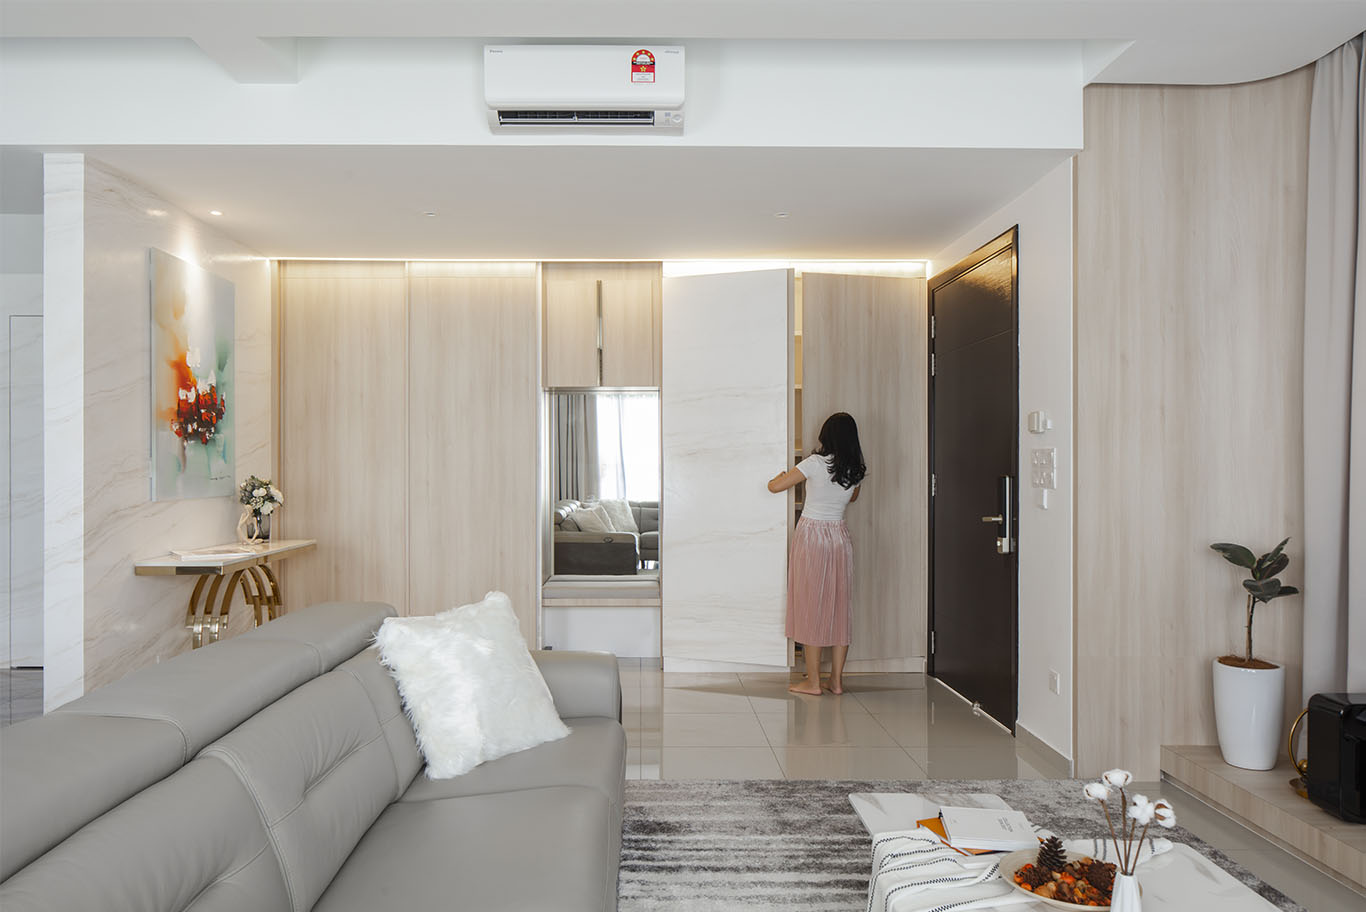 Grande Rhapsody minimalist living room with minimalist sliding door Mieux interior design